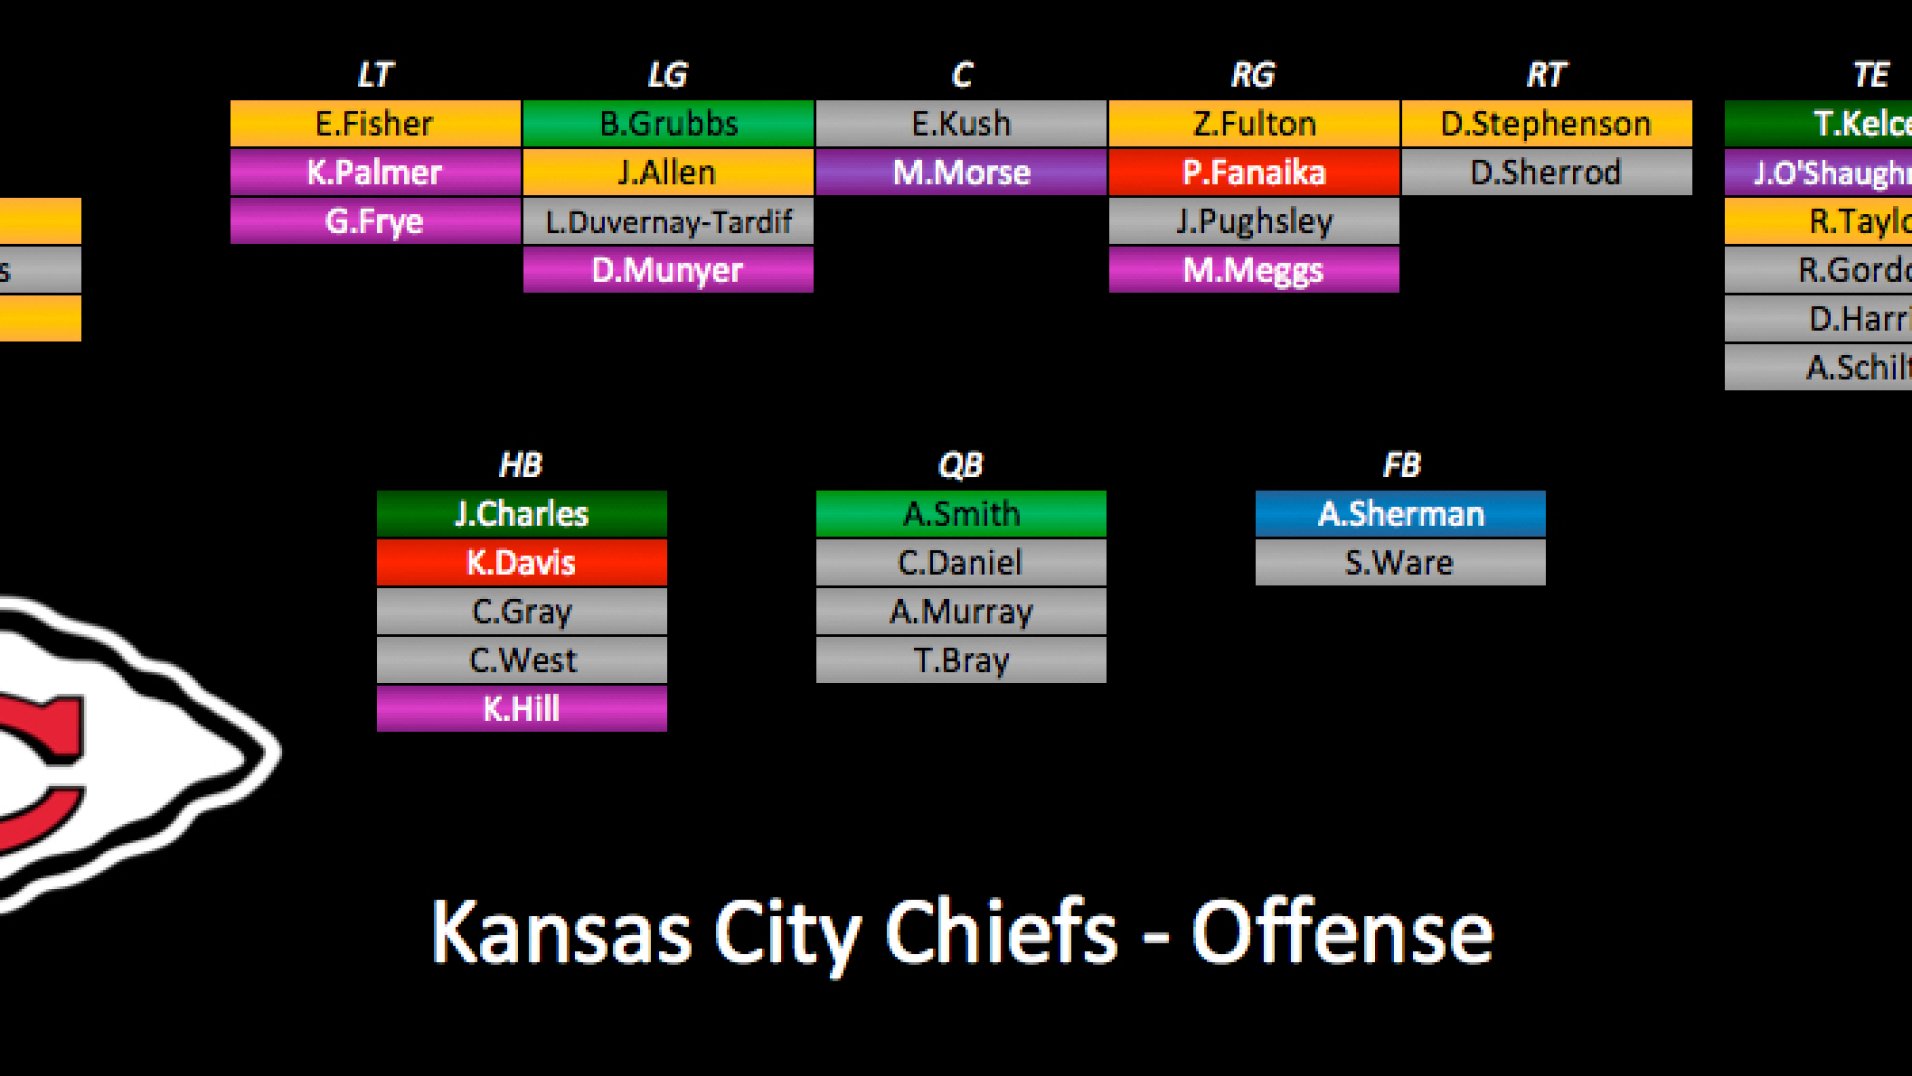 2015 Depth Charts Update: Kansas City Chiefs | NFL News, Rankings and Statistics | PFF